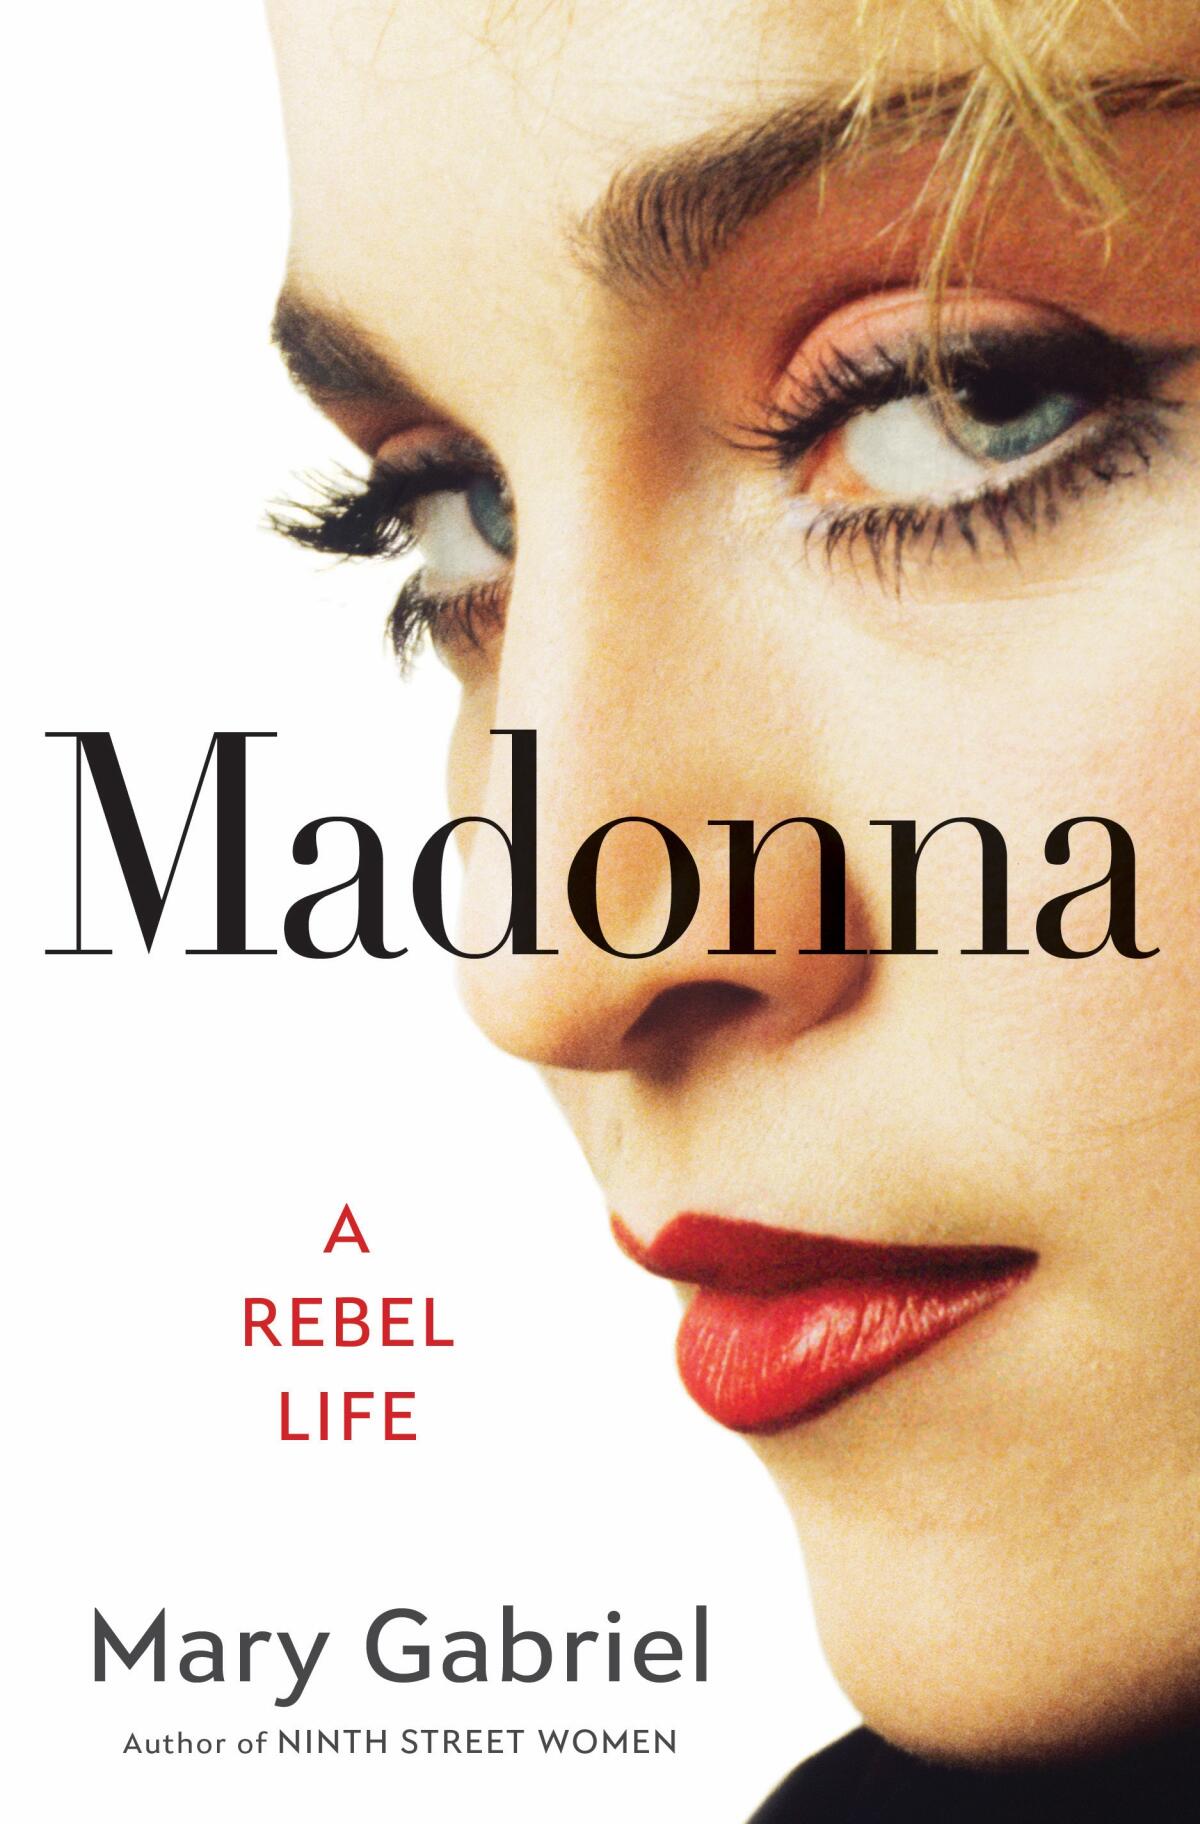 "Madonna: A Rebel Life," by Mary Gabriel